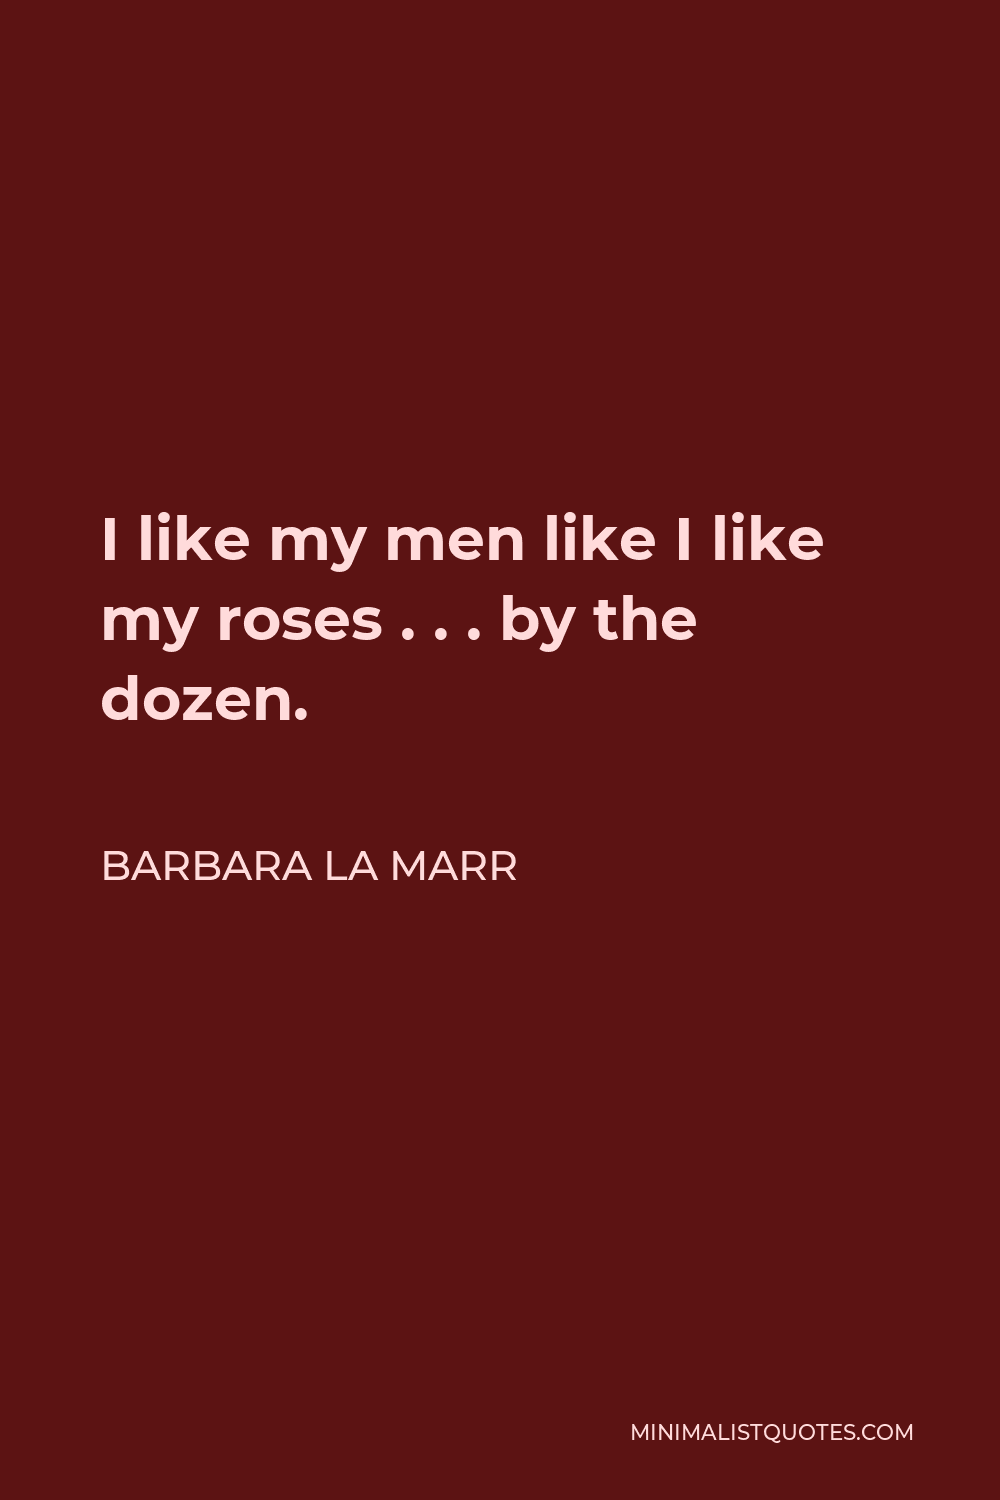 Barbara La Marr Quote - I like my men like I like my roses . . . by the dozen.